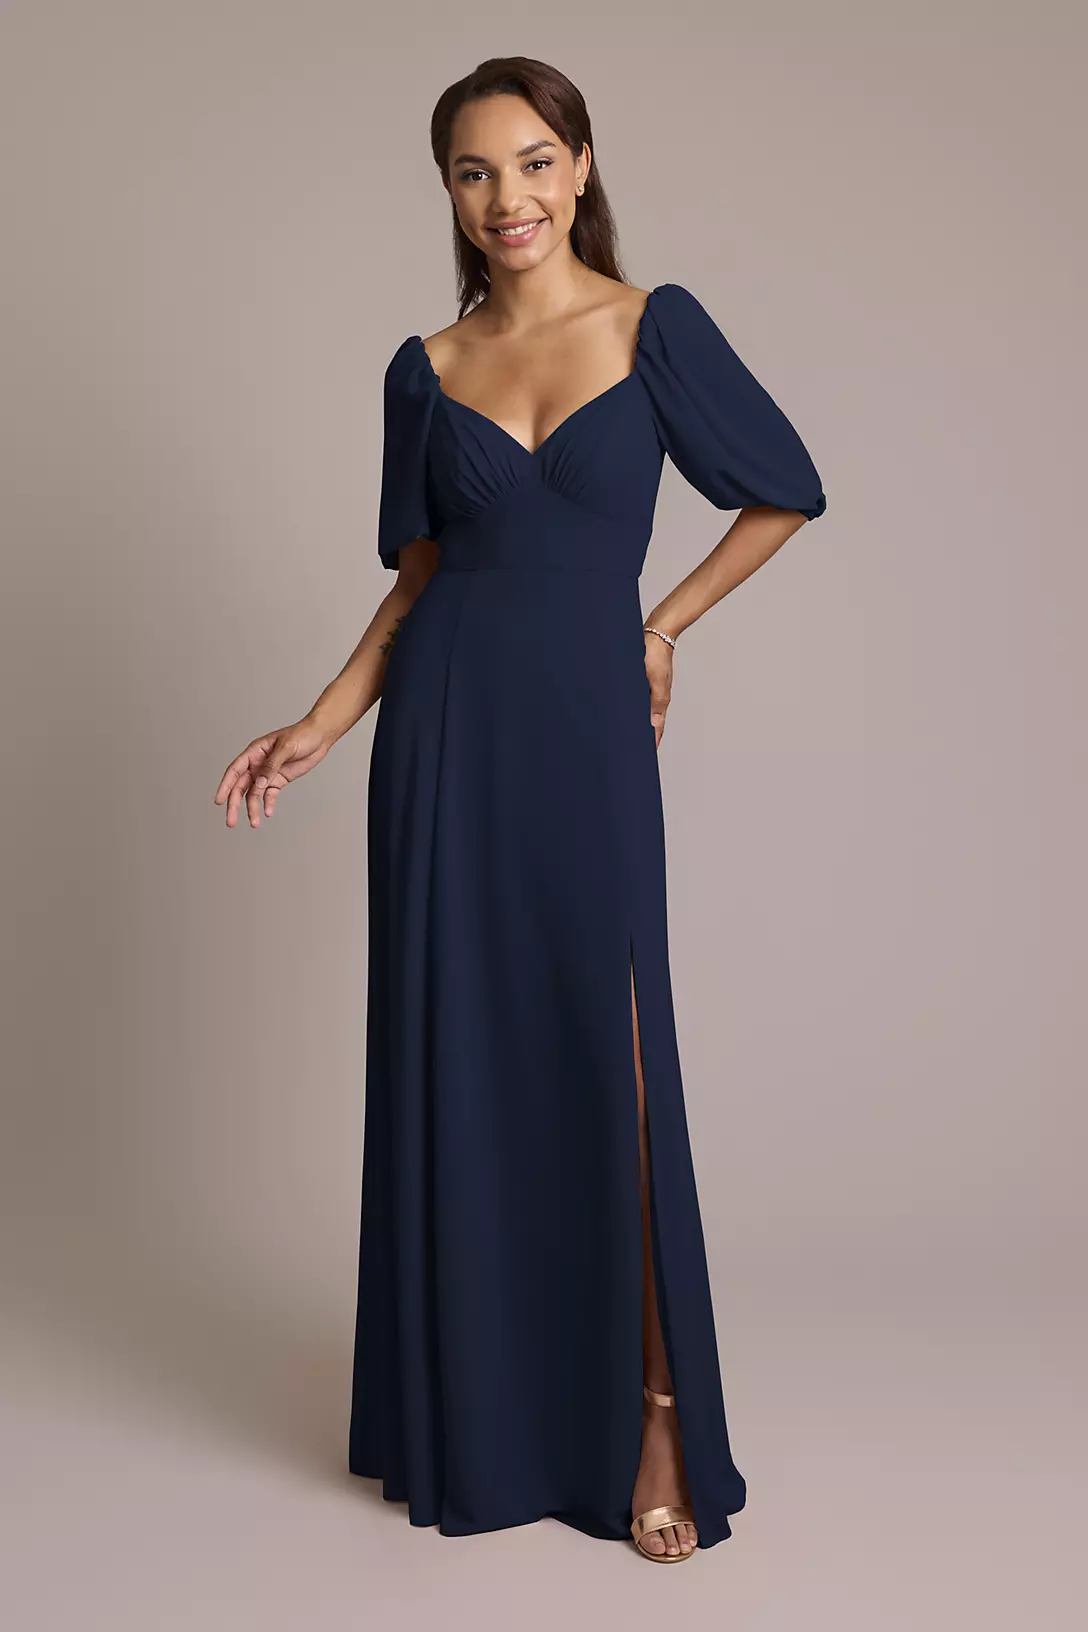 Chiffon Short Sleeve A-Line Dress Image 1